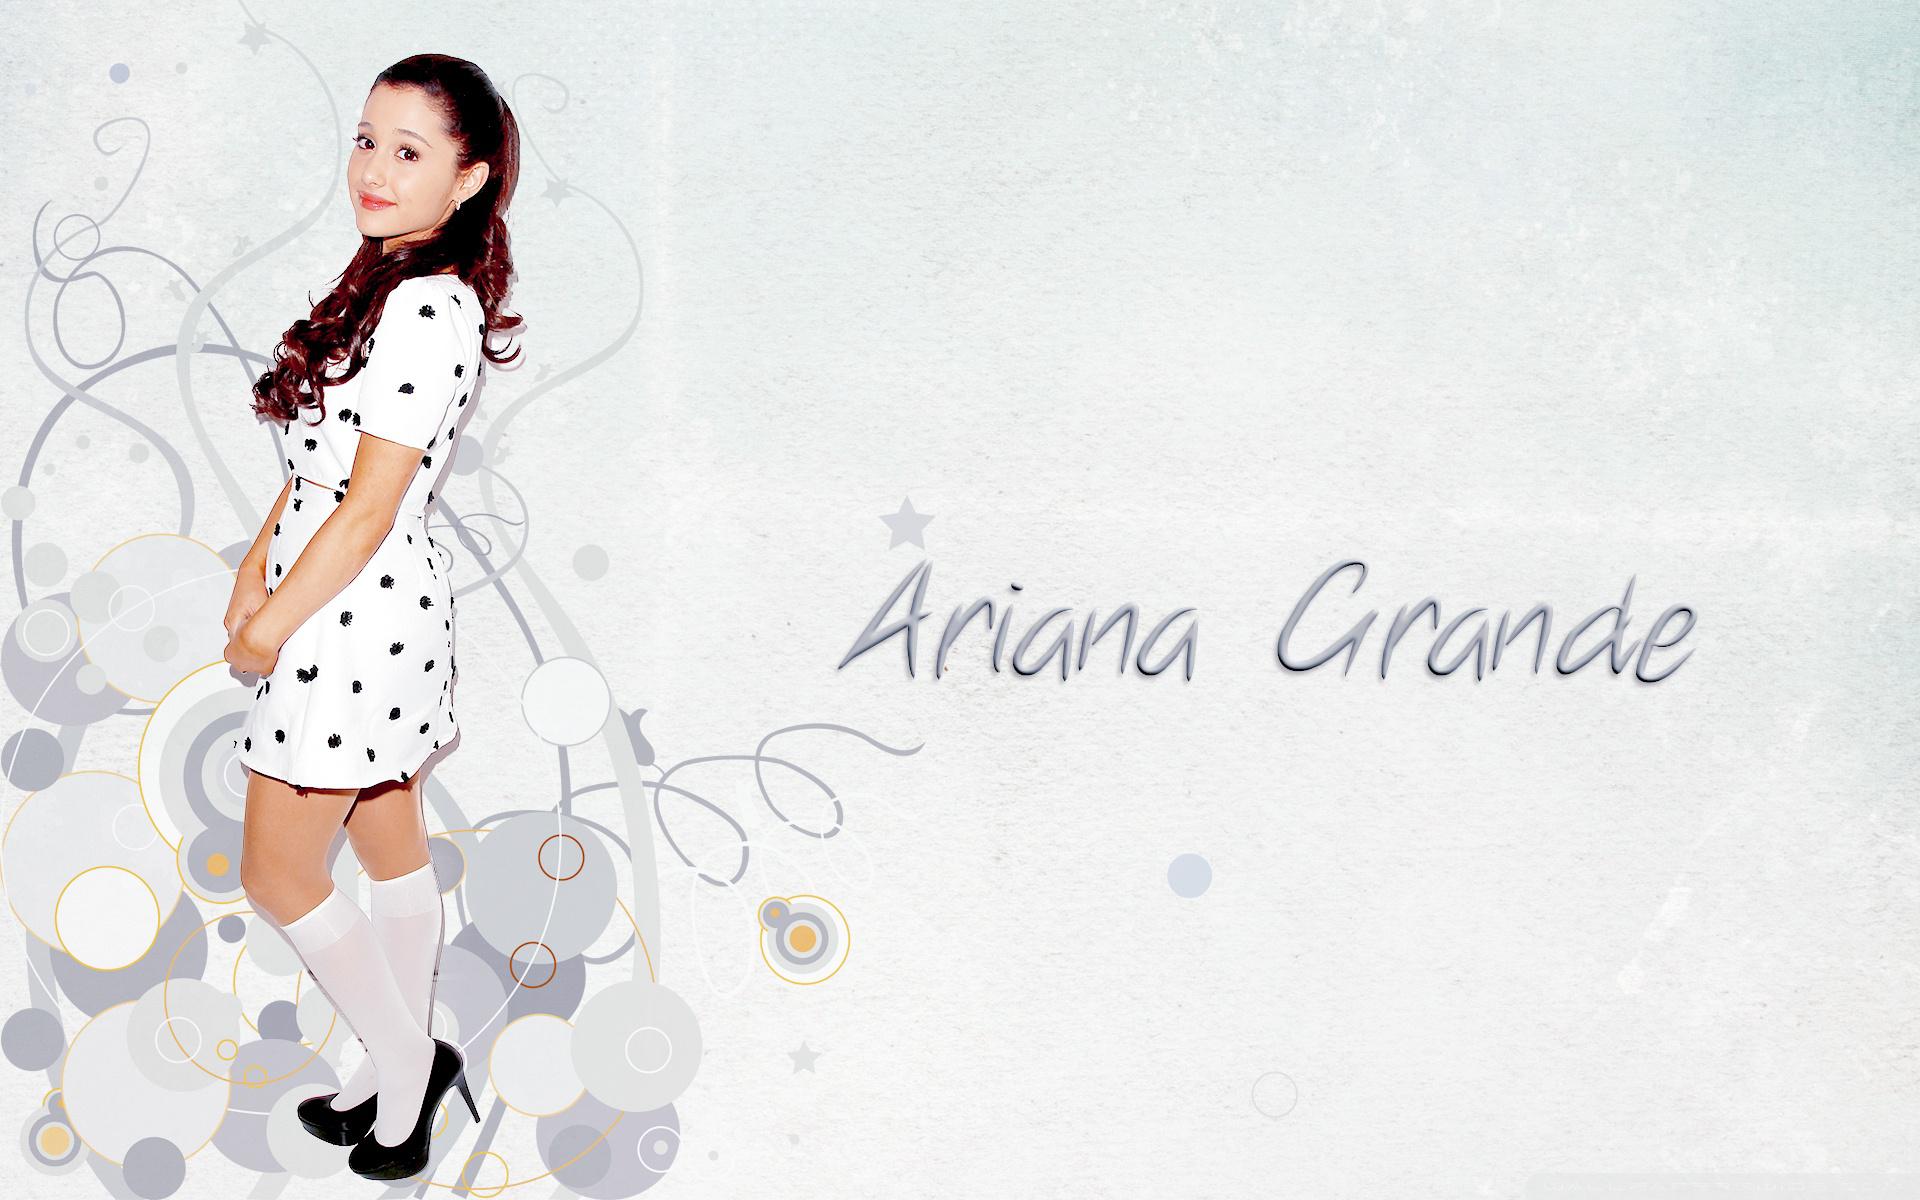 Ariana Grande High Socks - Ariana Grande Songs